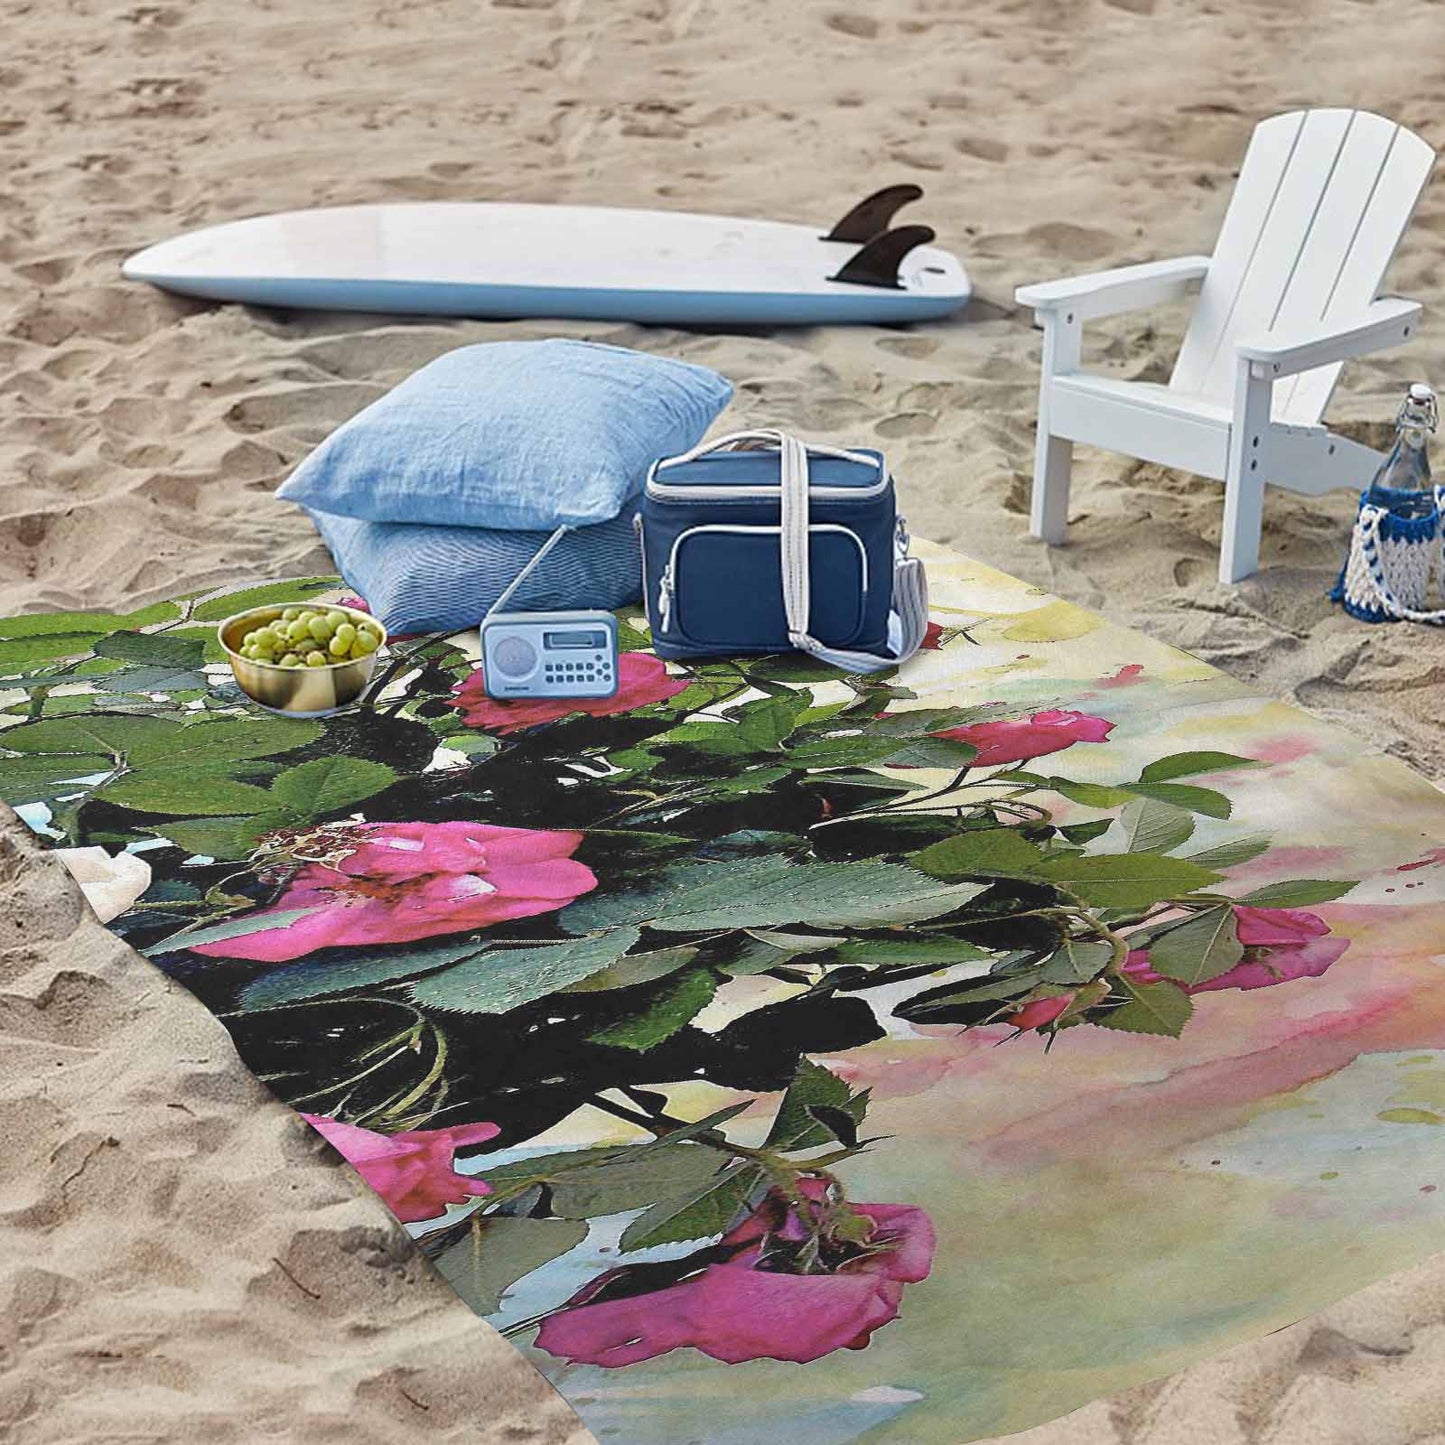 Vintage Floral waterproof picnic mat, 81 x 55in, Design 22